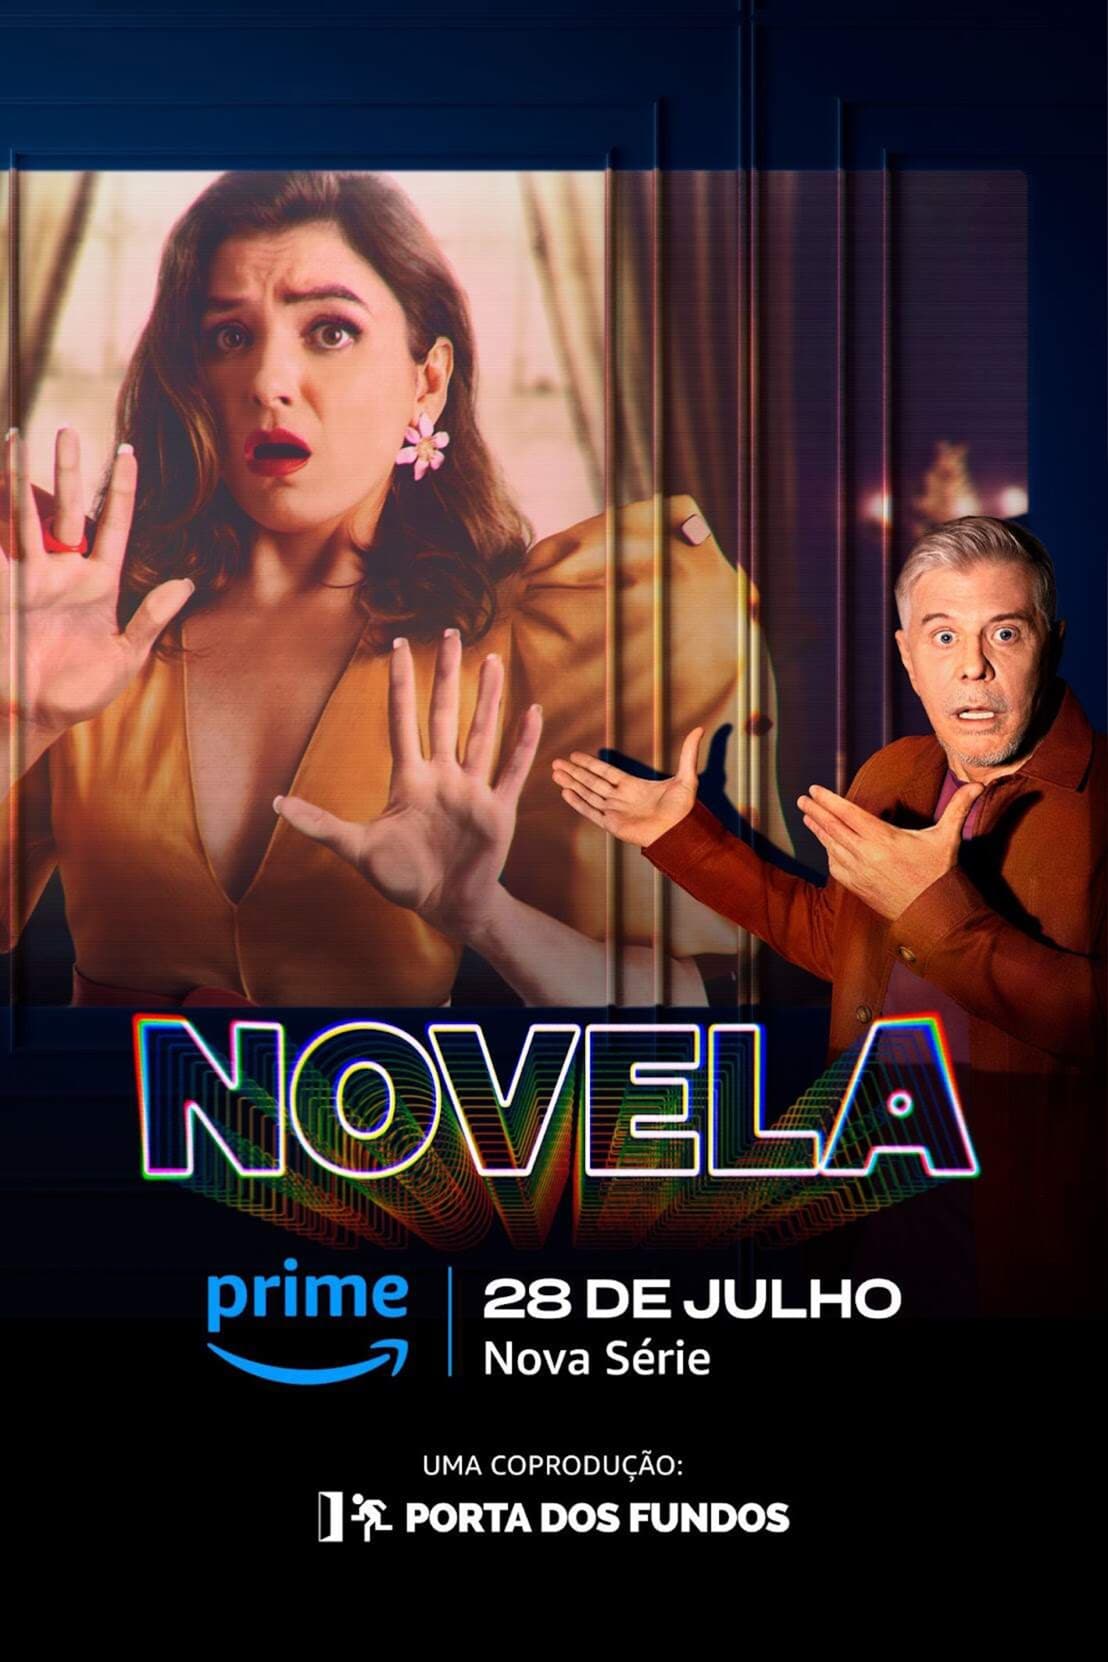 TV ratings for Soap Opera (Novela) in Spain. Amazon Prime Video TV series